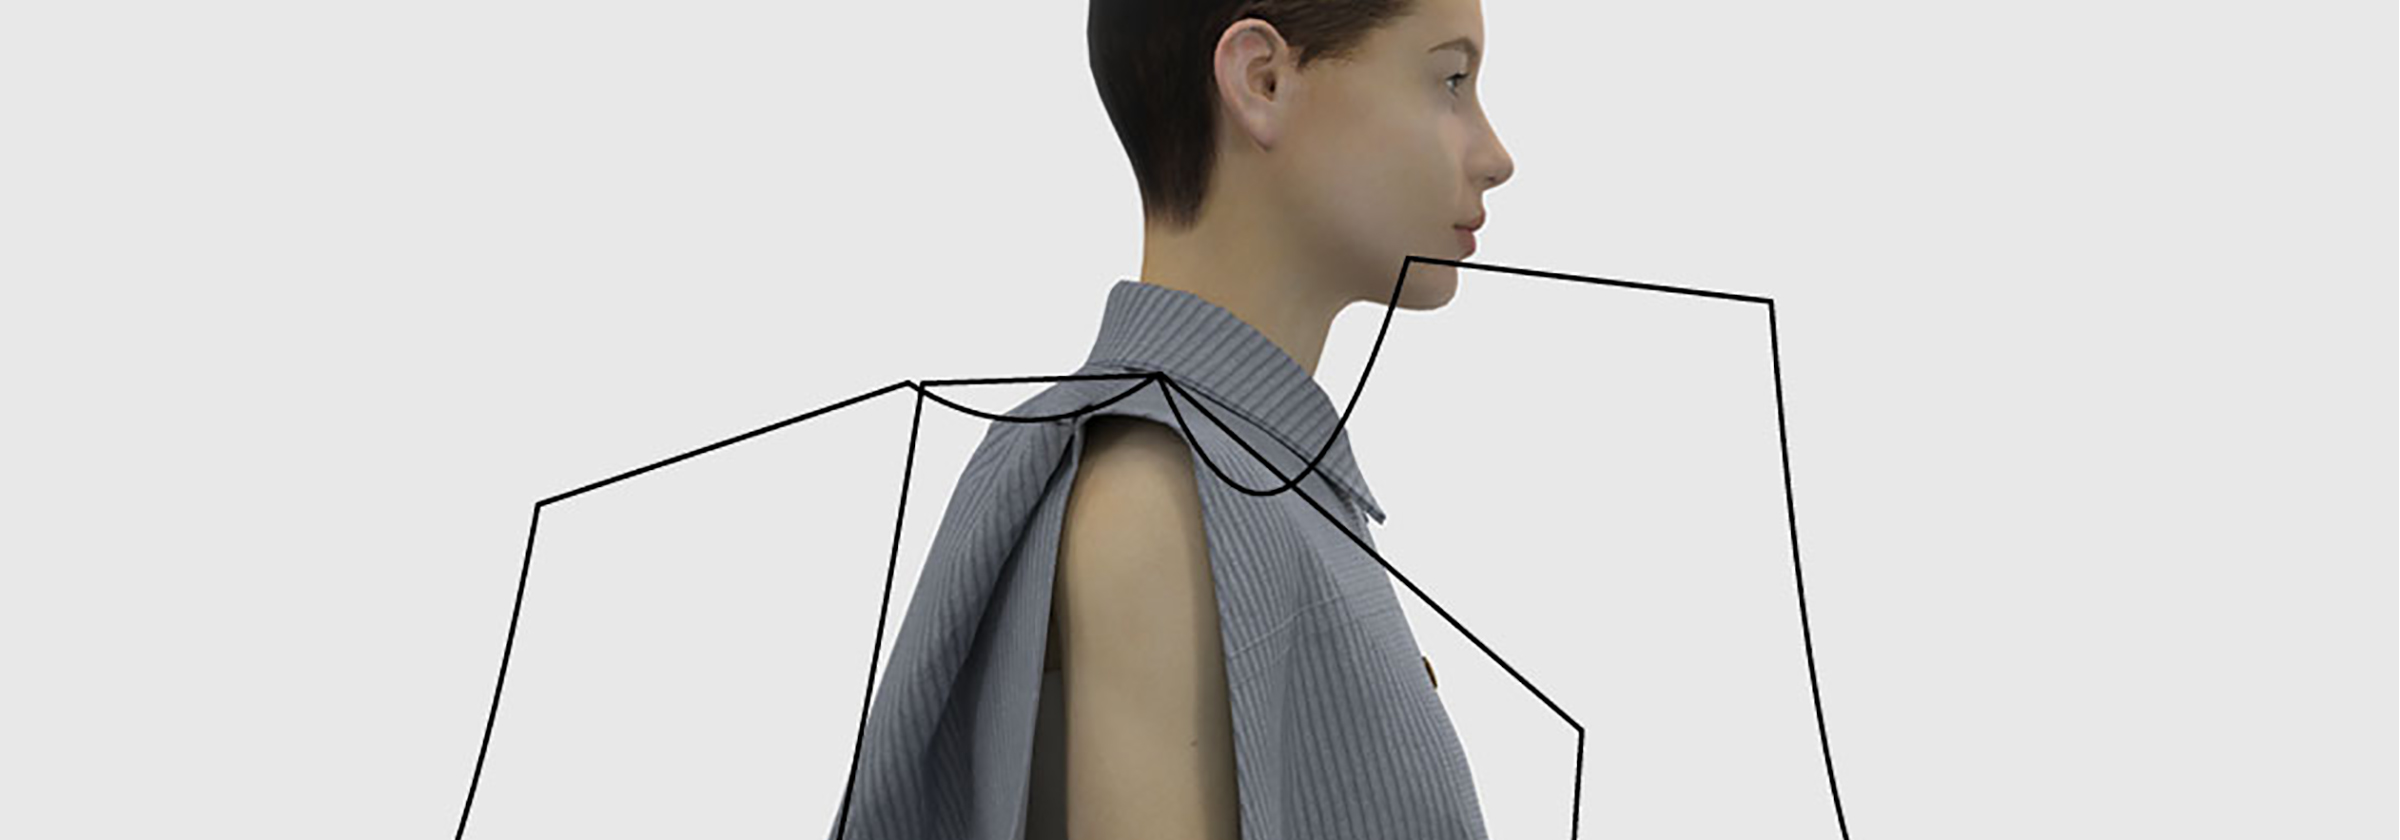 Maria Calva Digital model with graphic dimensions around